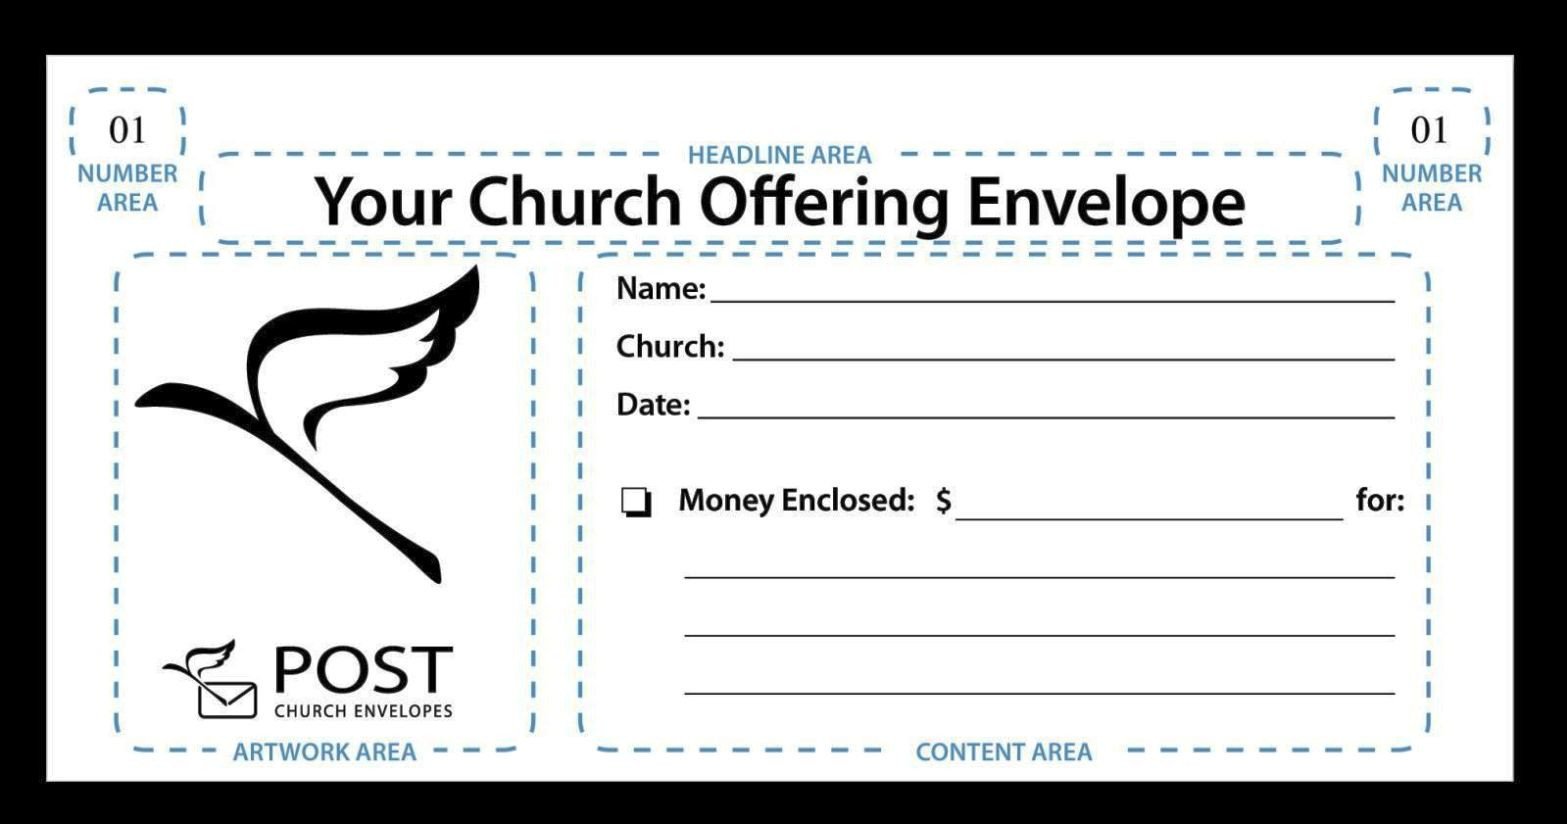 Church fering Envelopes Templates SampleTemplatess